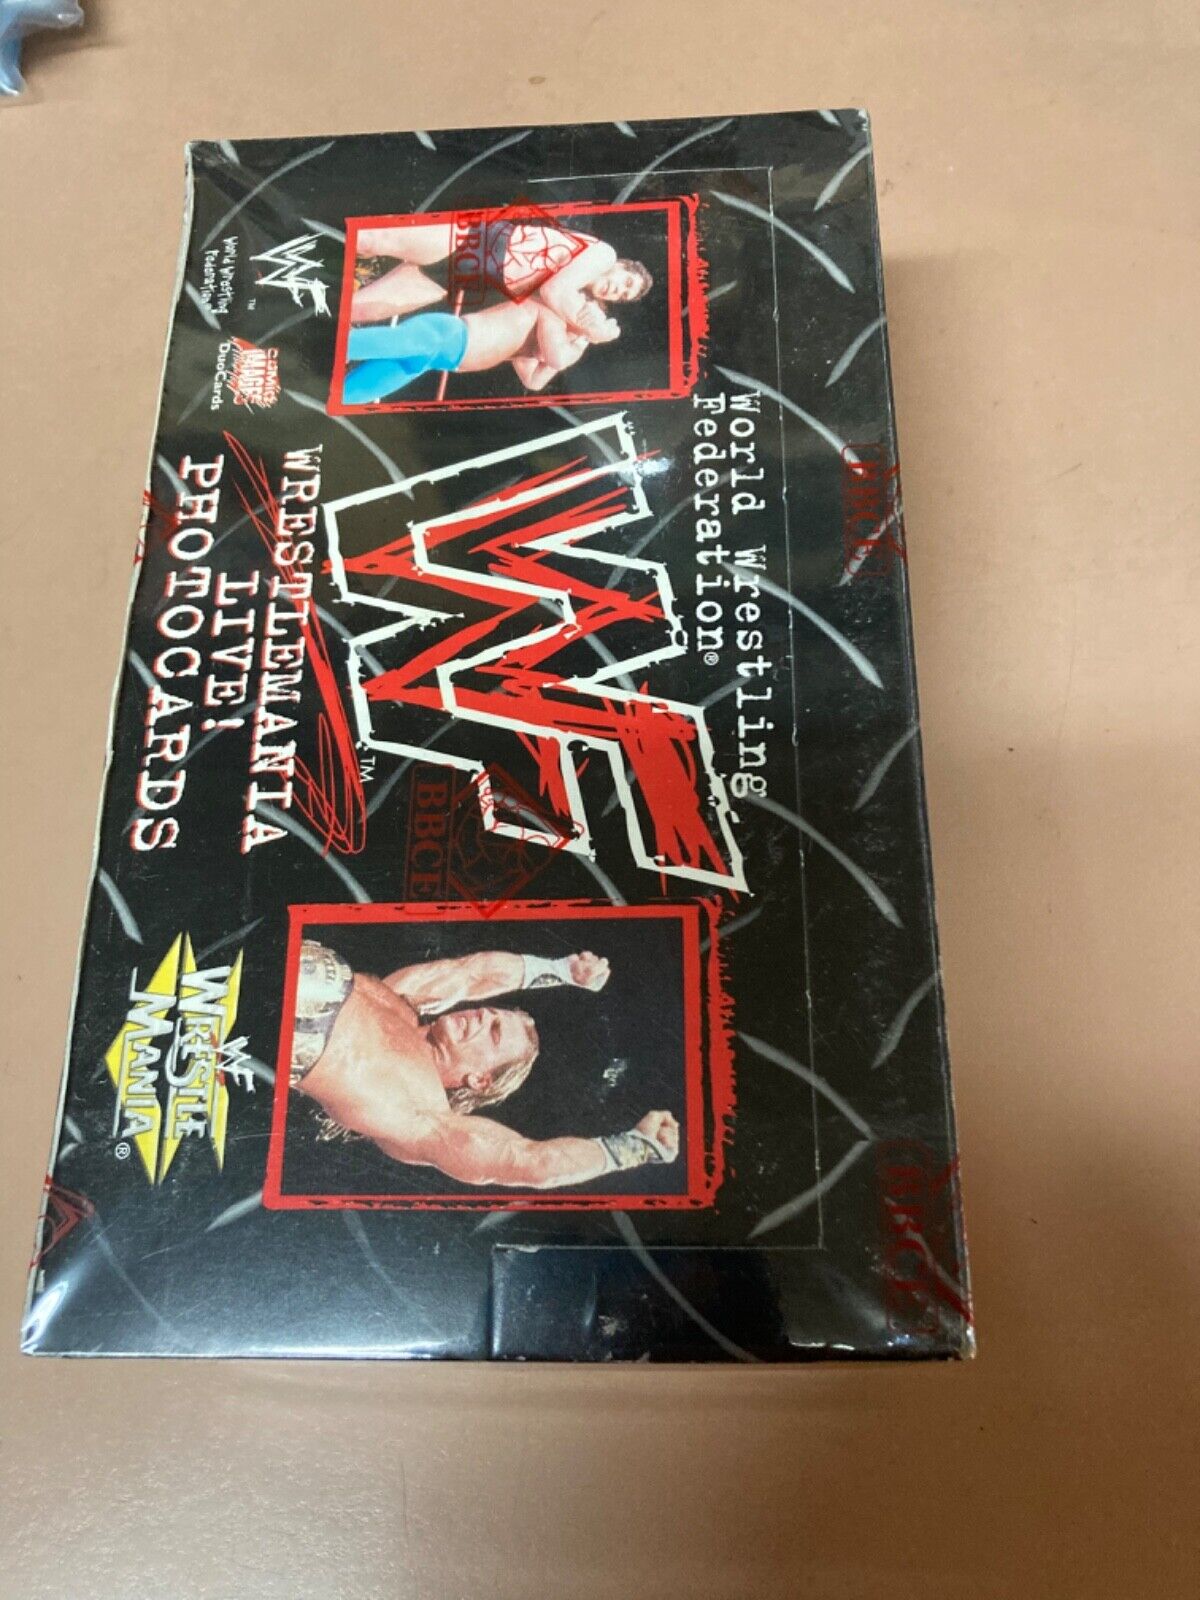 Bbce Sealed 1999 titan WWF wrestlemania live photo cards 36 packs